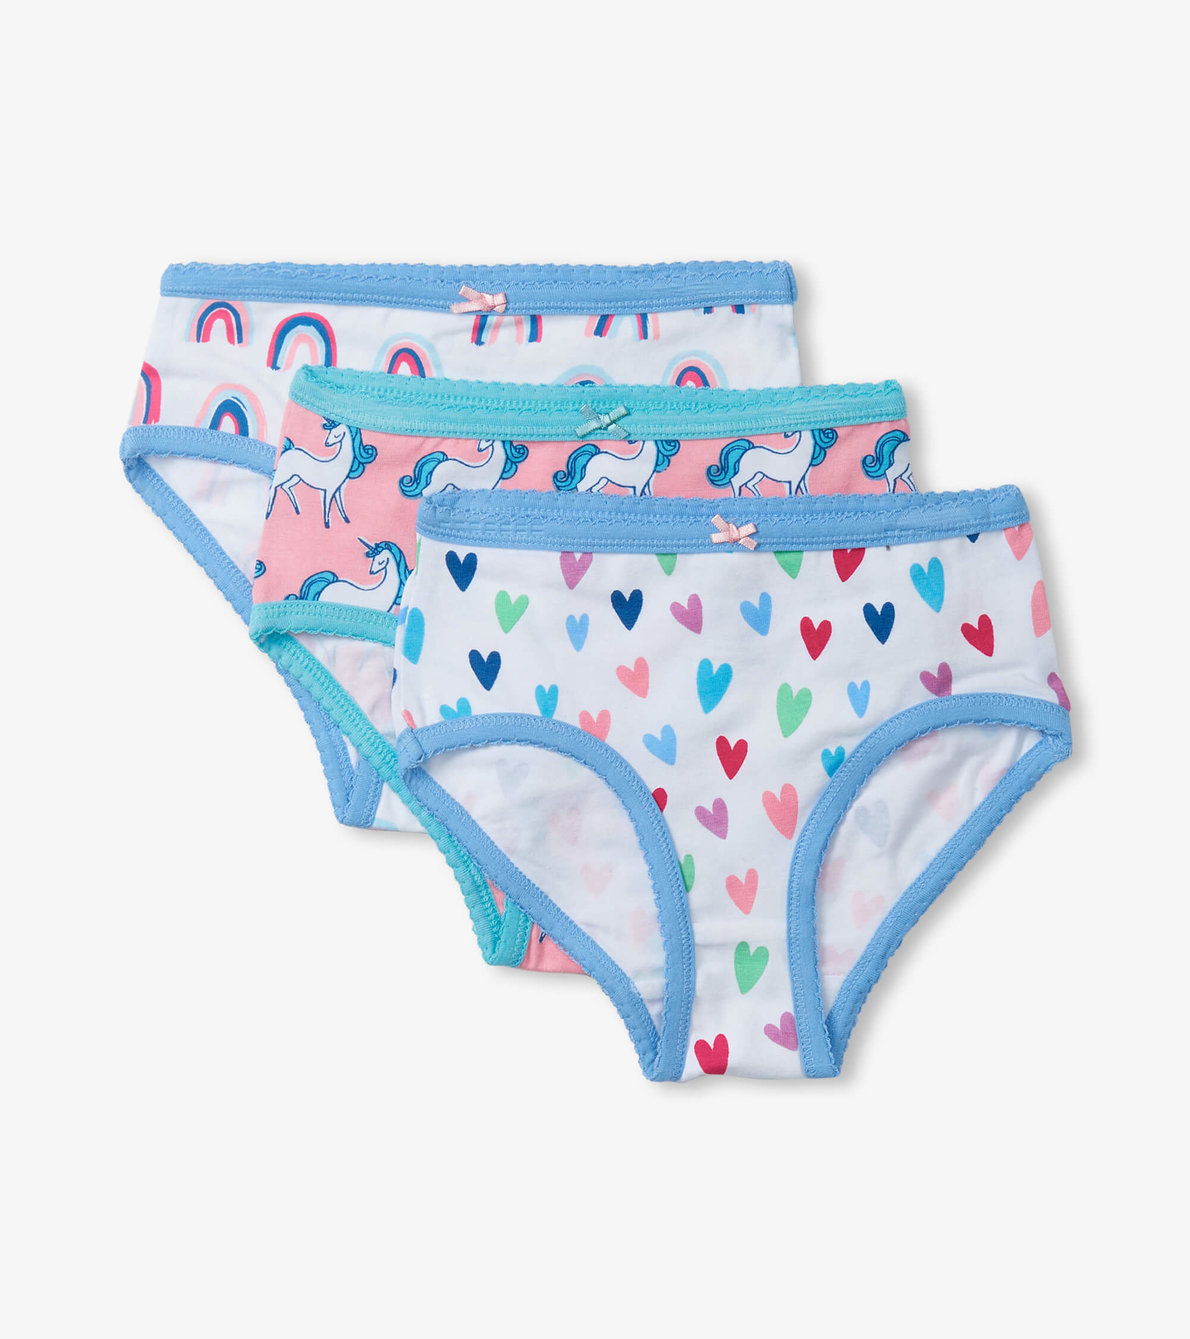 View larger image of Pretty Patterns Girls Brief Underwear 3 Pack